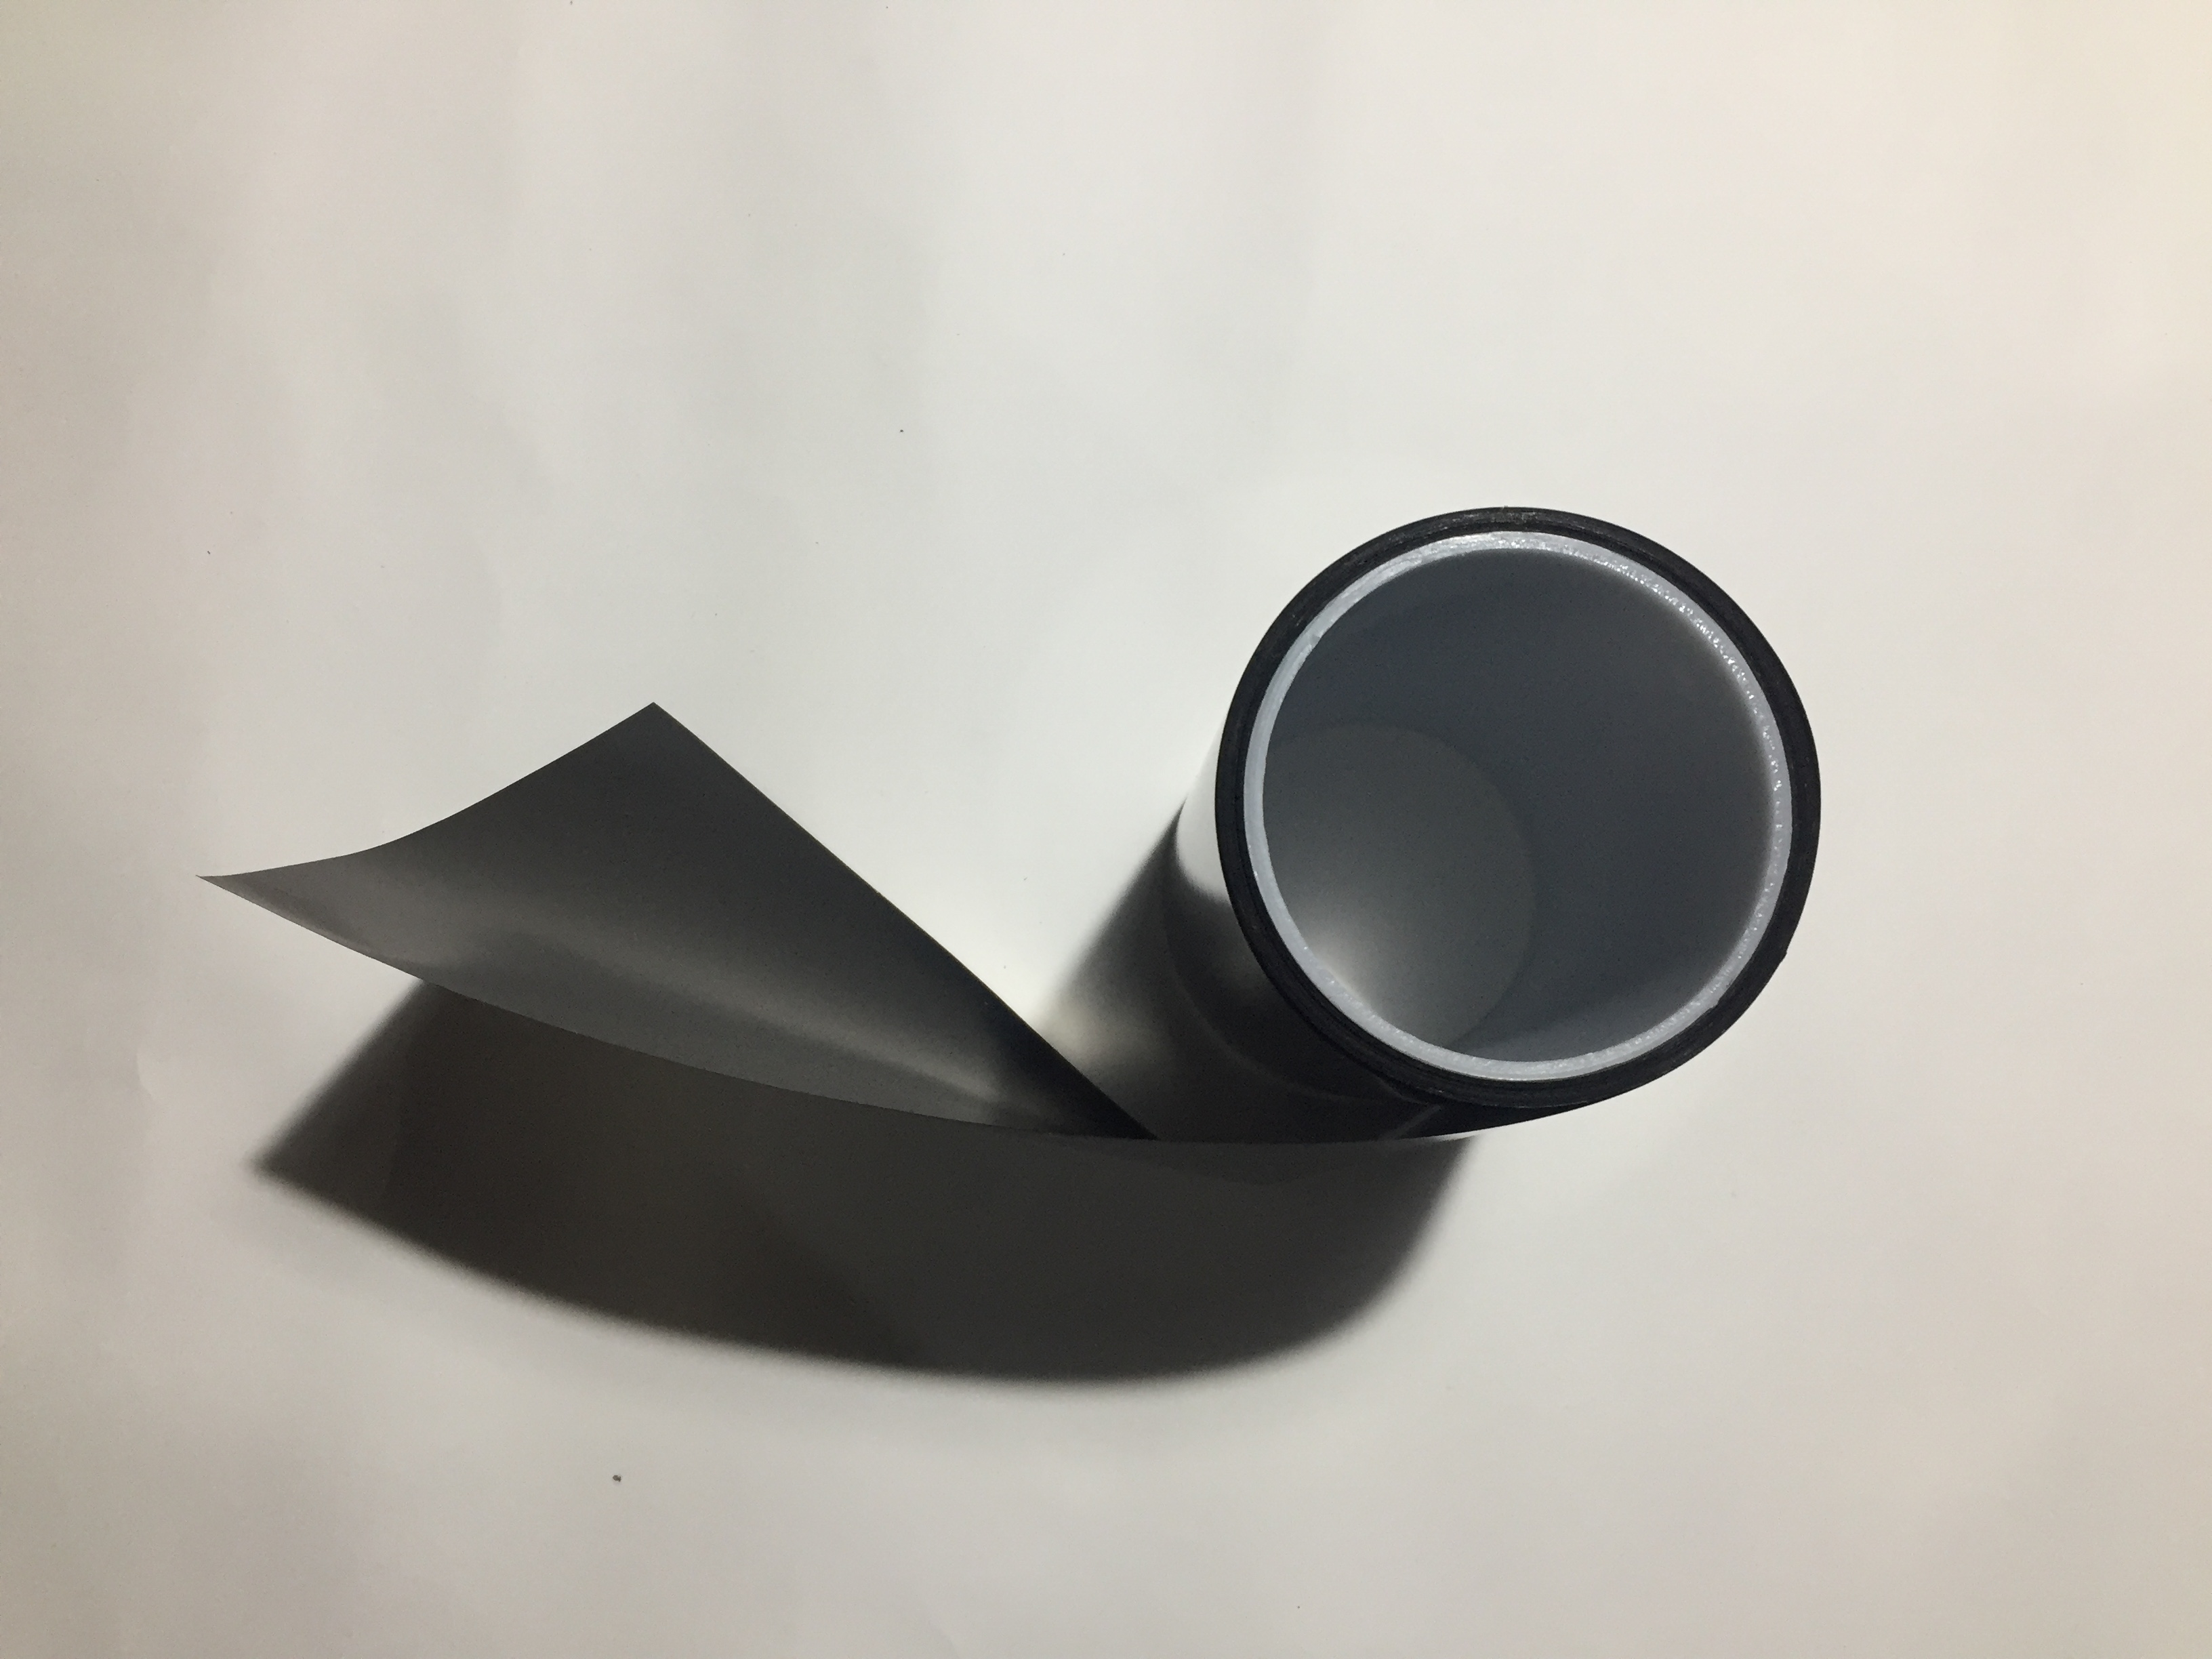 Single-sided Carbon Black carbon conductive film For Ekg